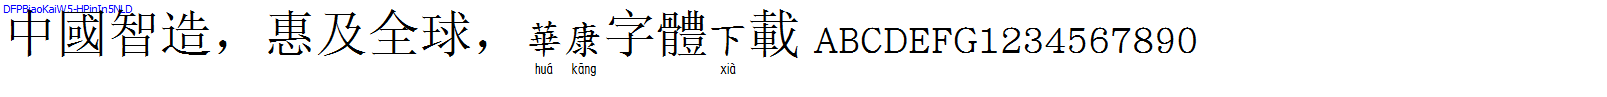 華康字體DFPBiaoKaiW5-HPinIn5NLD.TTF